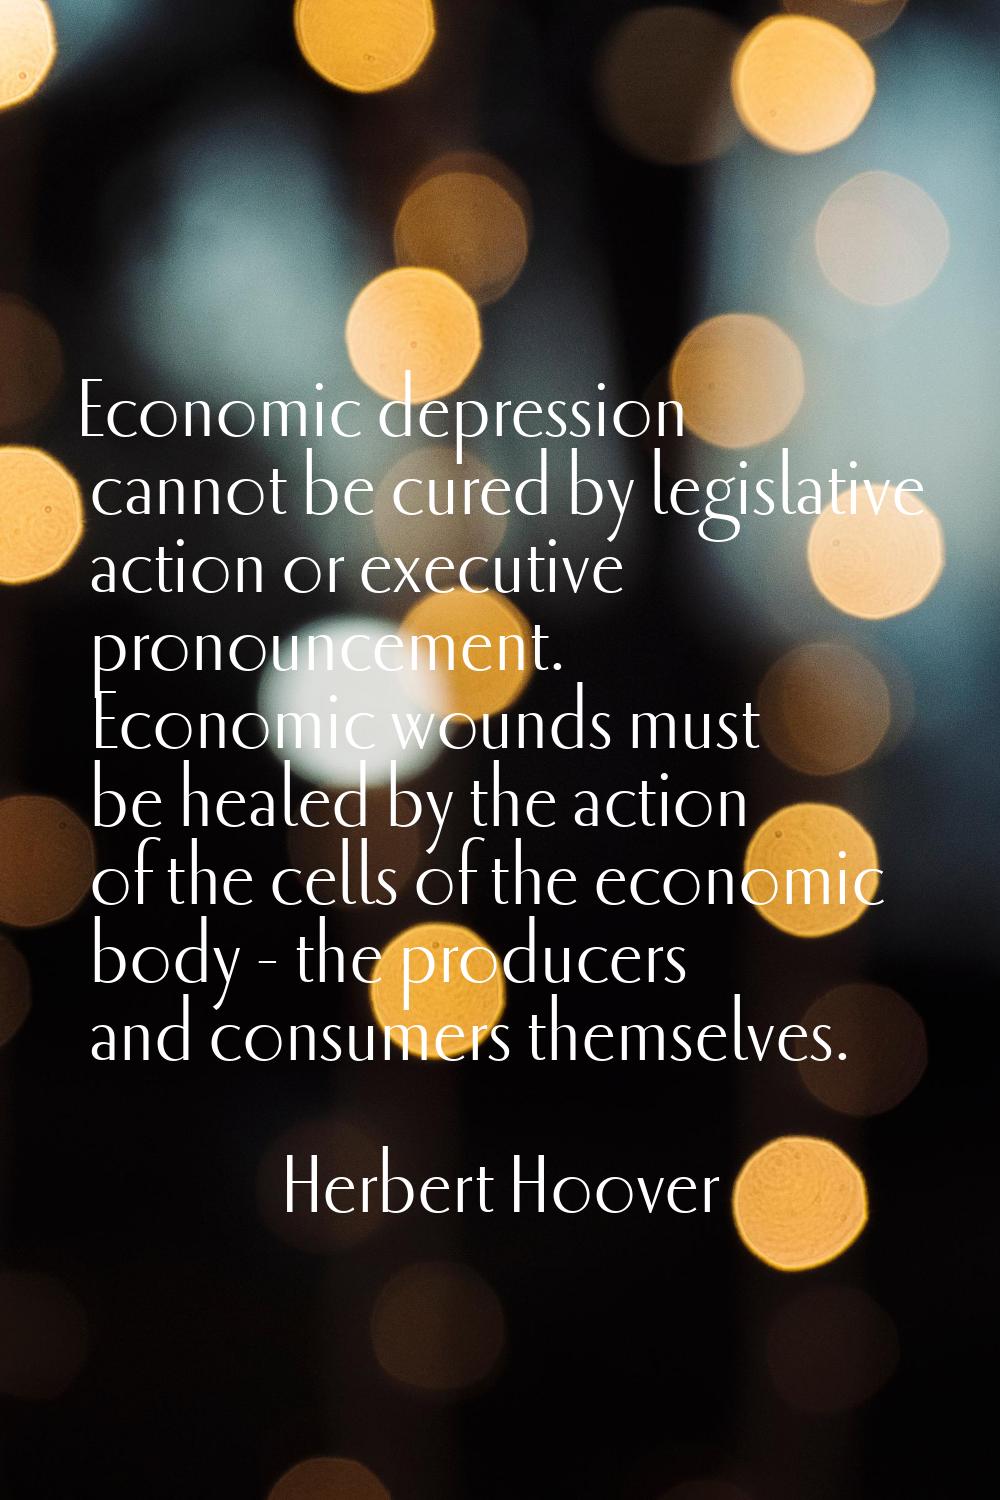 Economic depression cannot be cured by legislative action or executive pronouncement. Economic woun